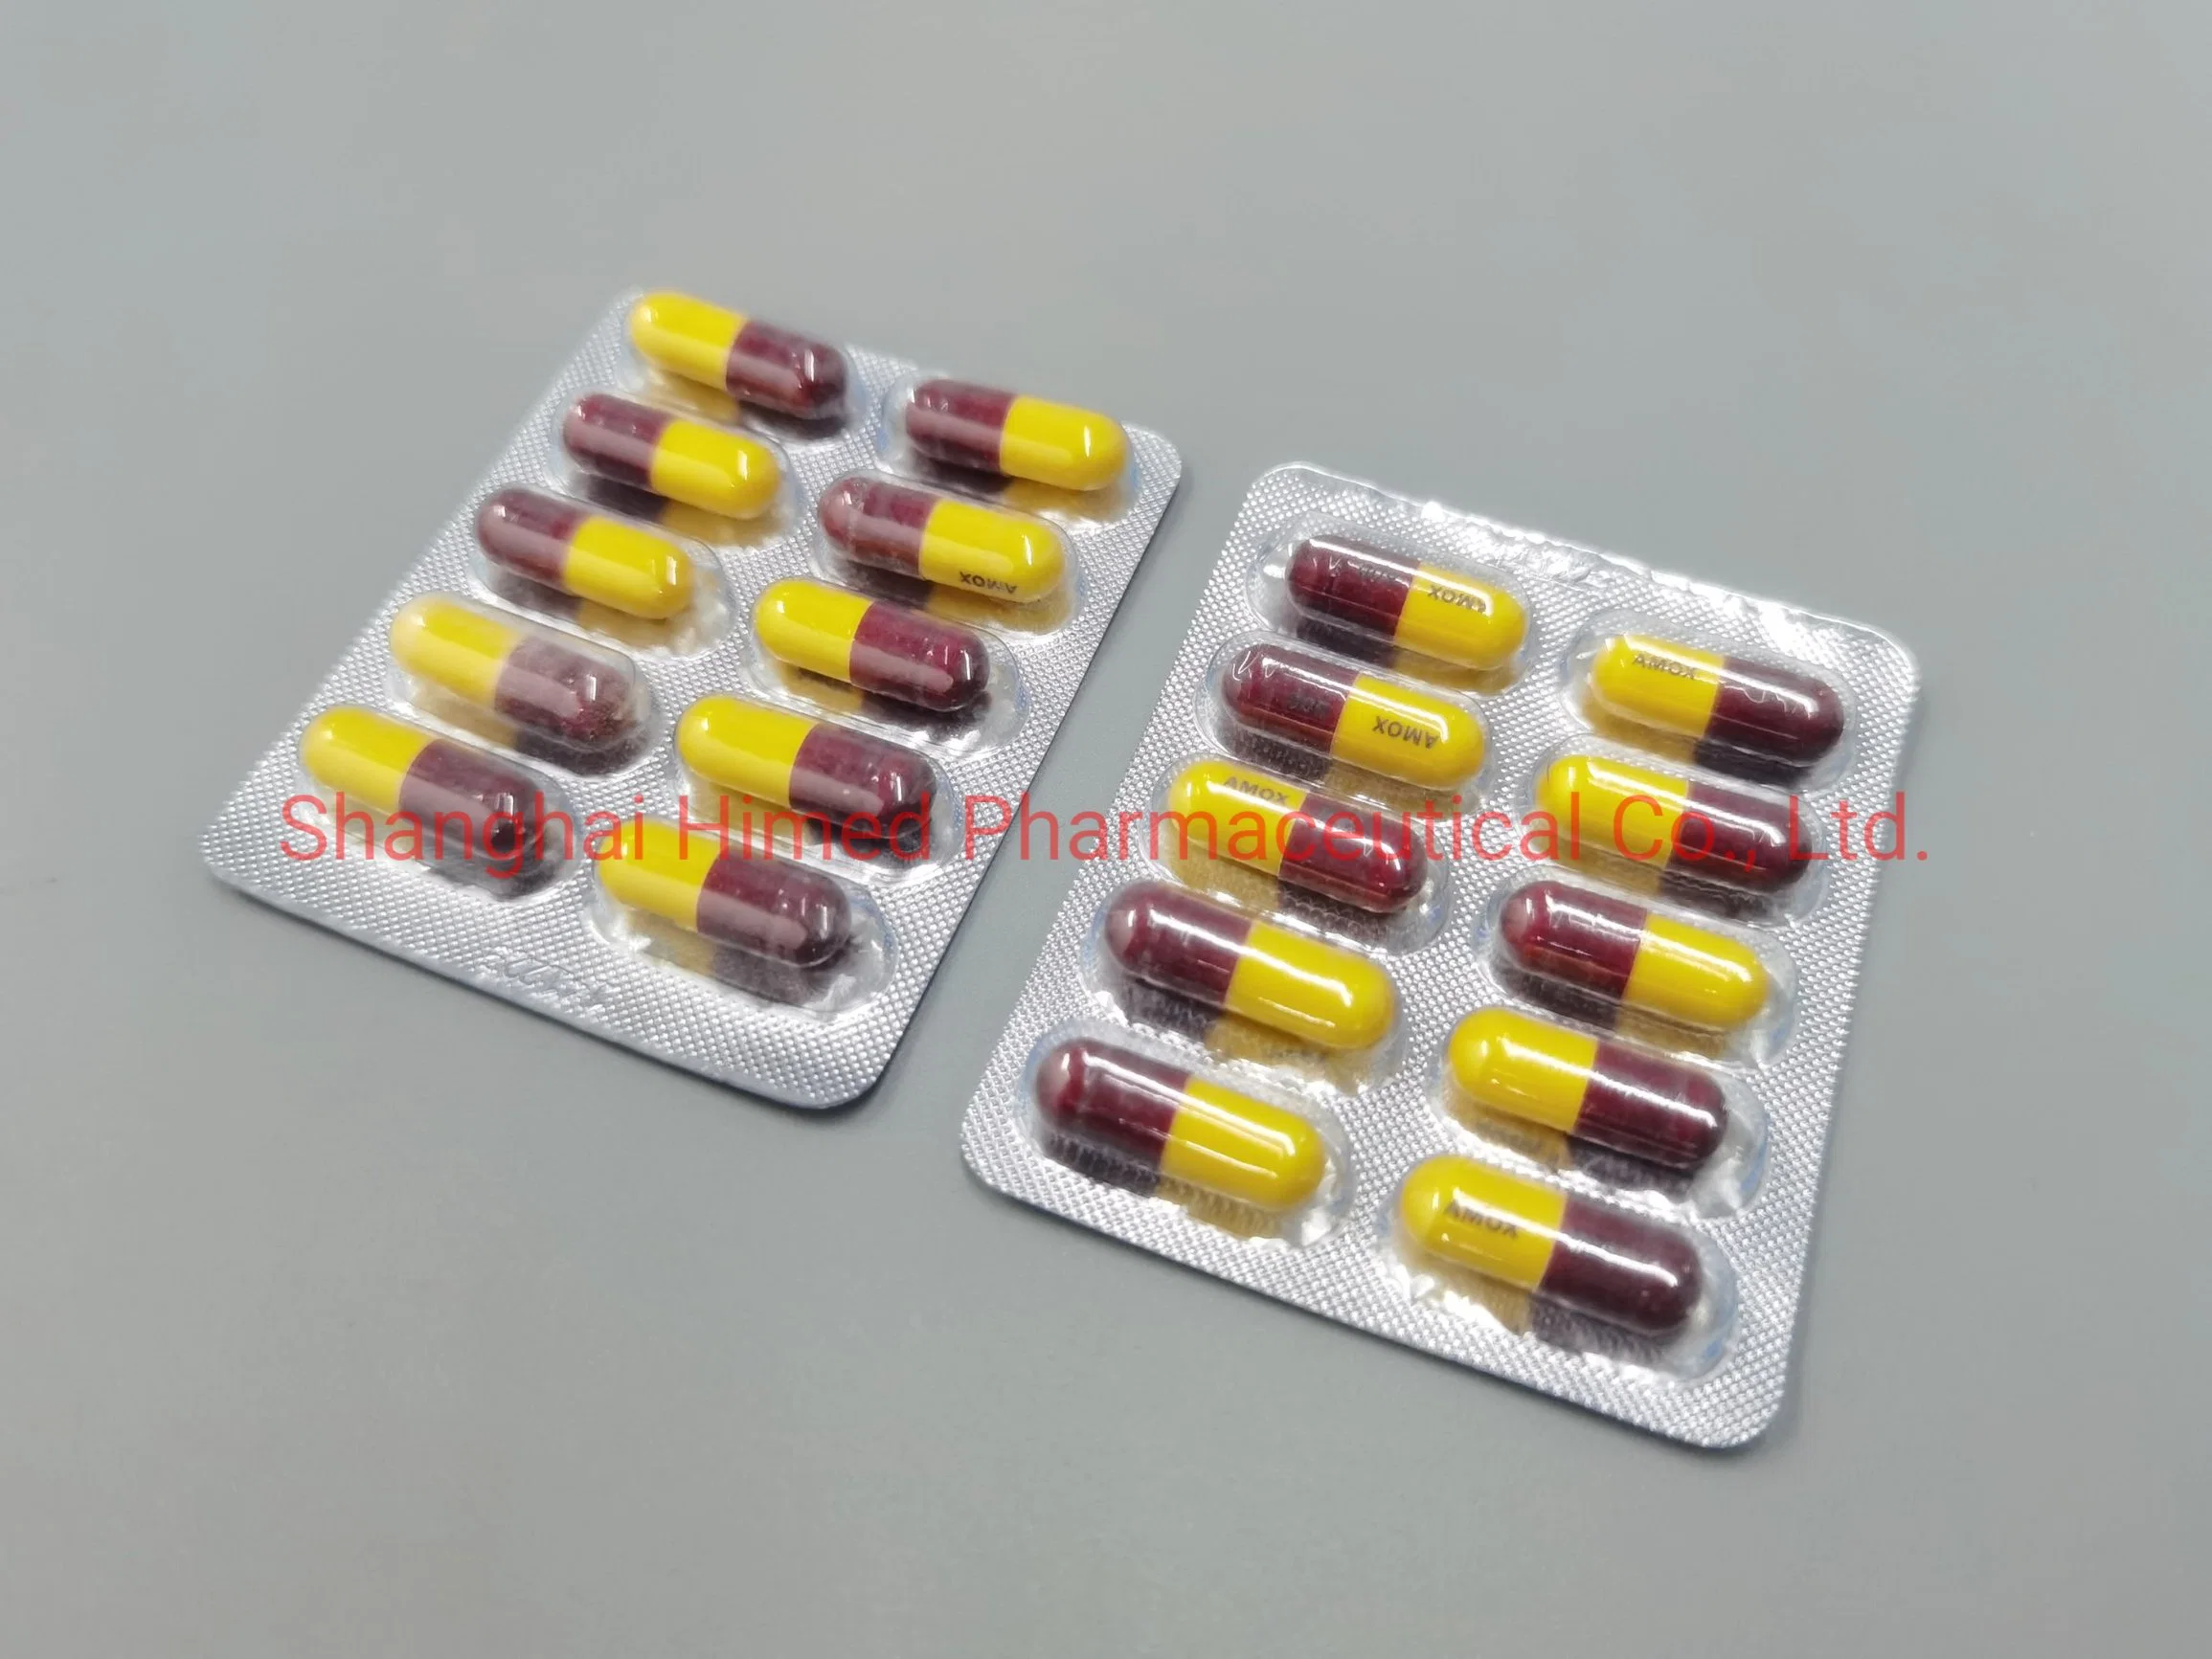 Ampicilina Capusle 250mg/500mg produto farmacêutico